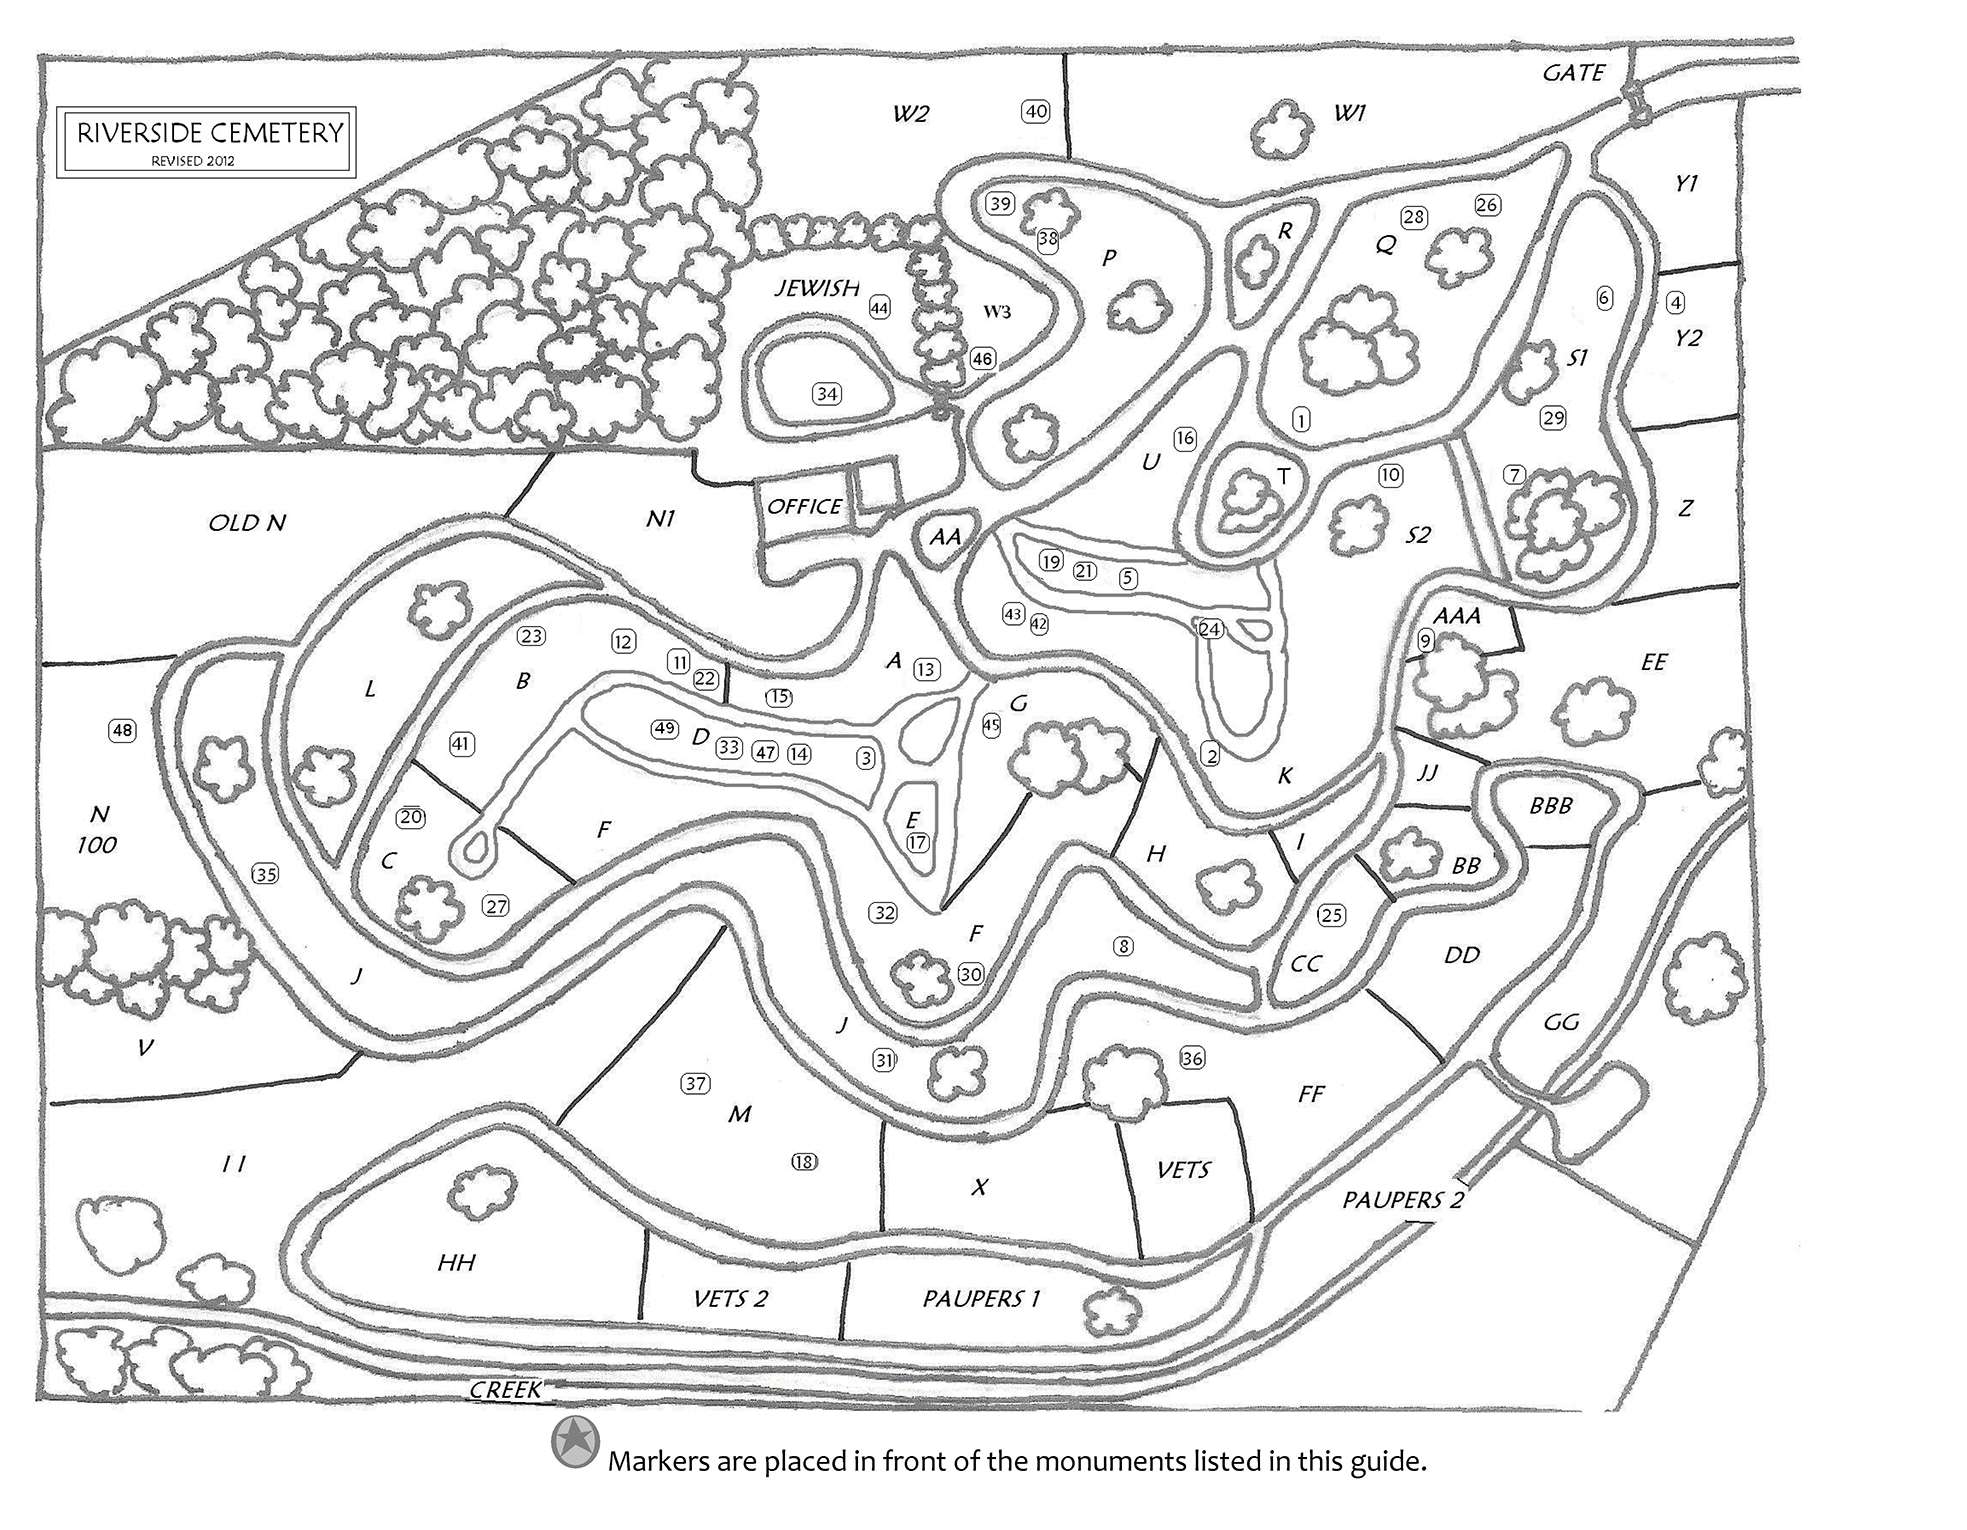 Cemetery map of Riverside Cemetery in Ashville, North Carolina